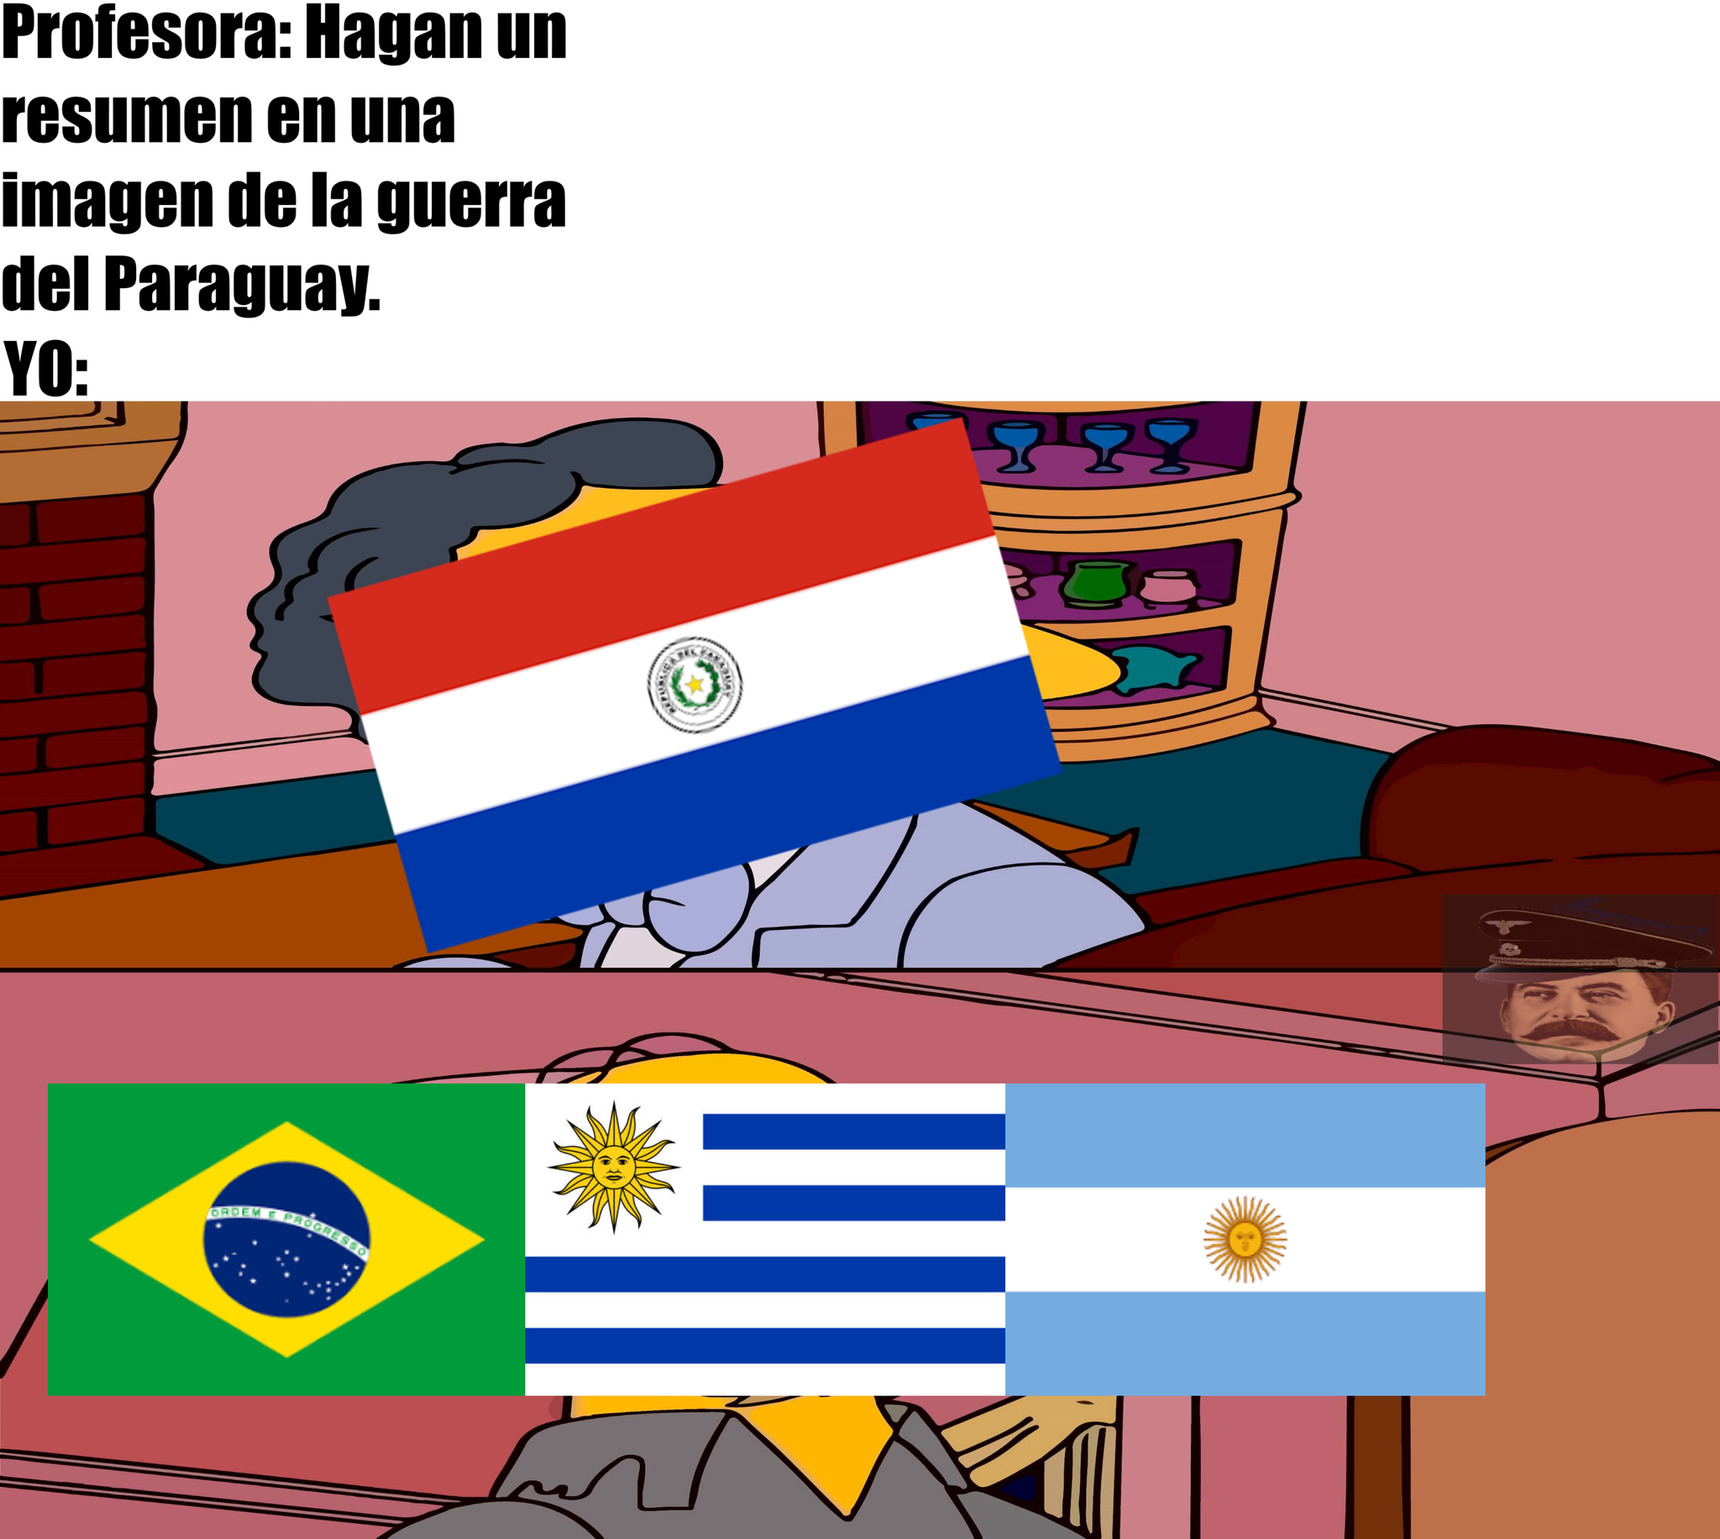 Como Paraguay dejó de existir en simples palabras. - meme